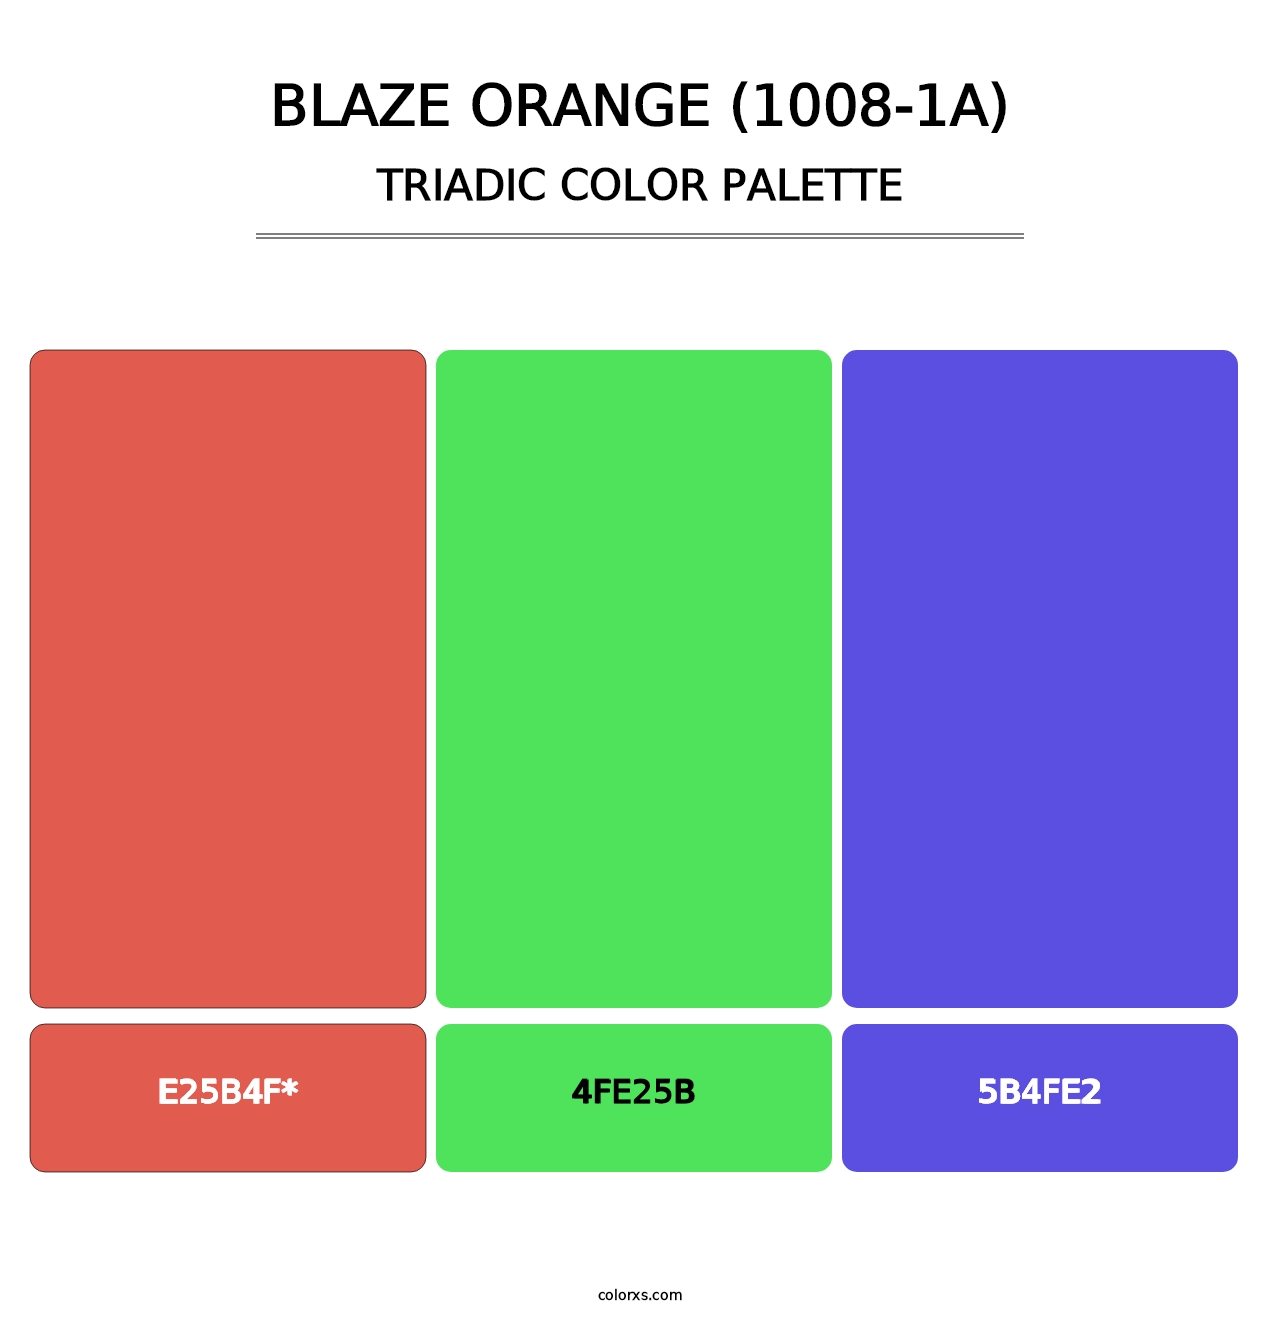 Blaze Orange (1008-1A) - Triadic Color Palette